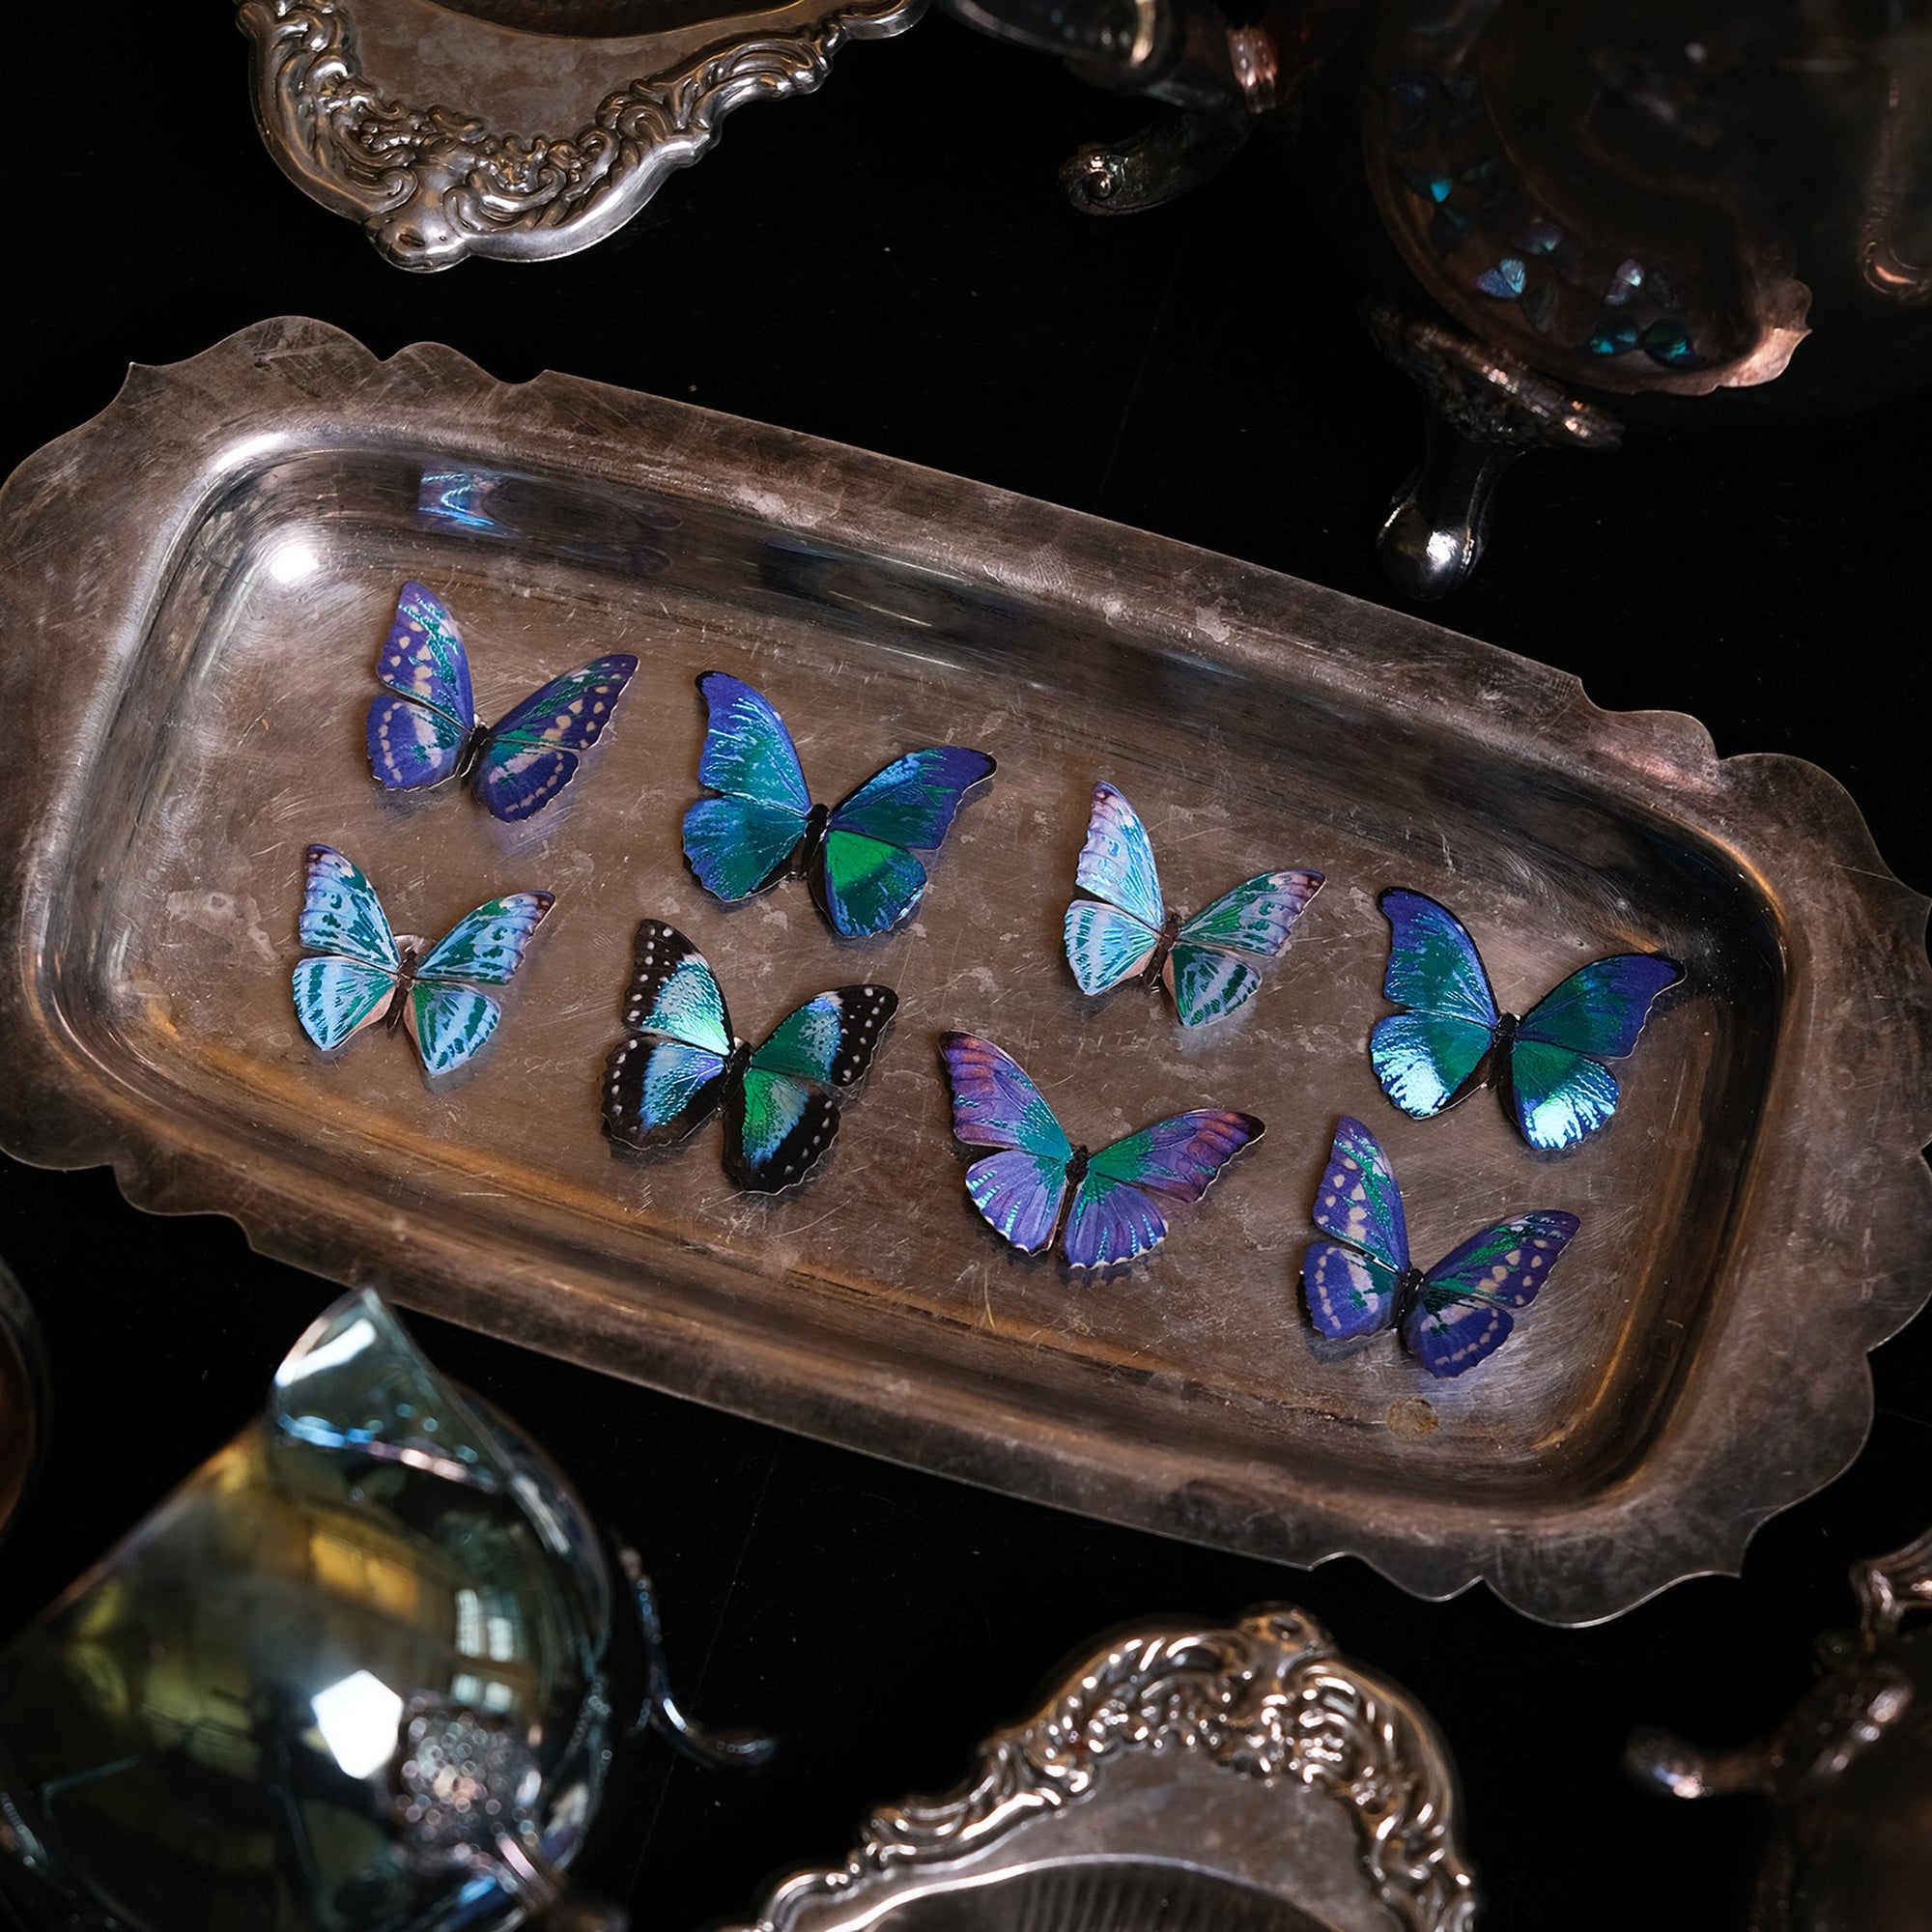 'Cobalt' Mini Moprho Butterfly Set Artist Wholesale